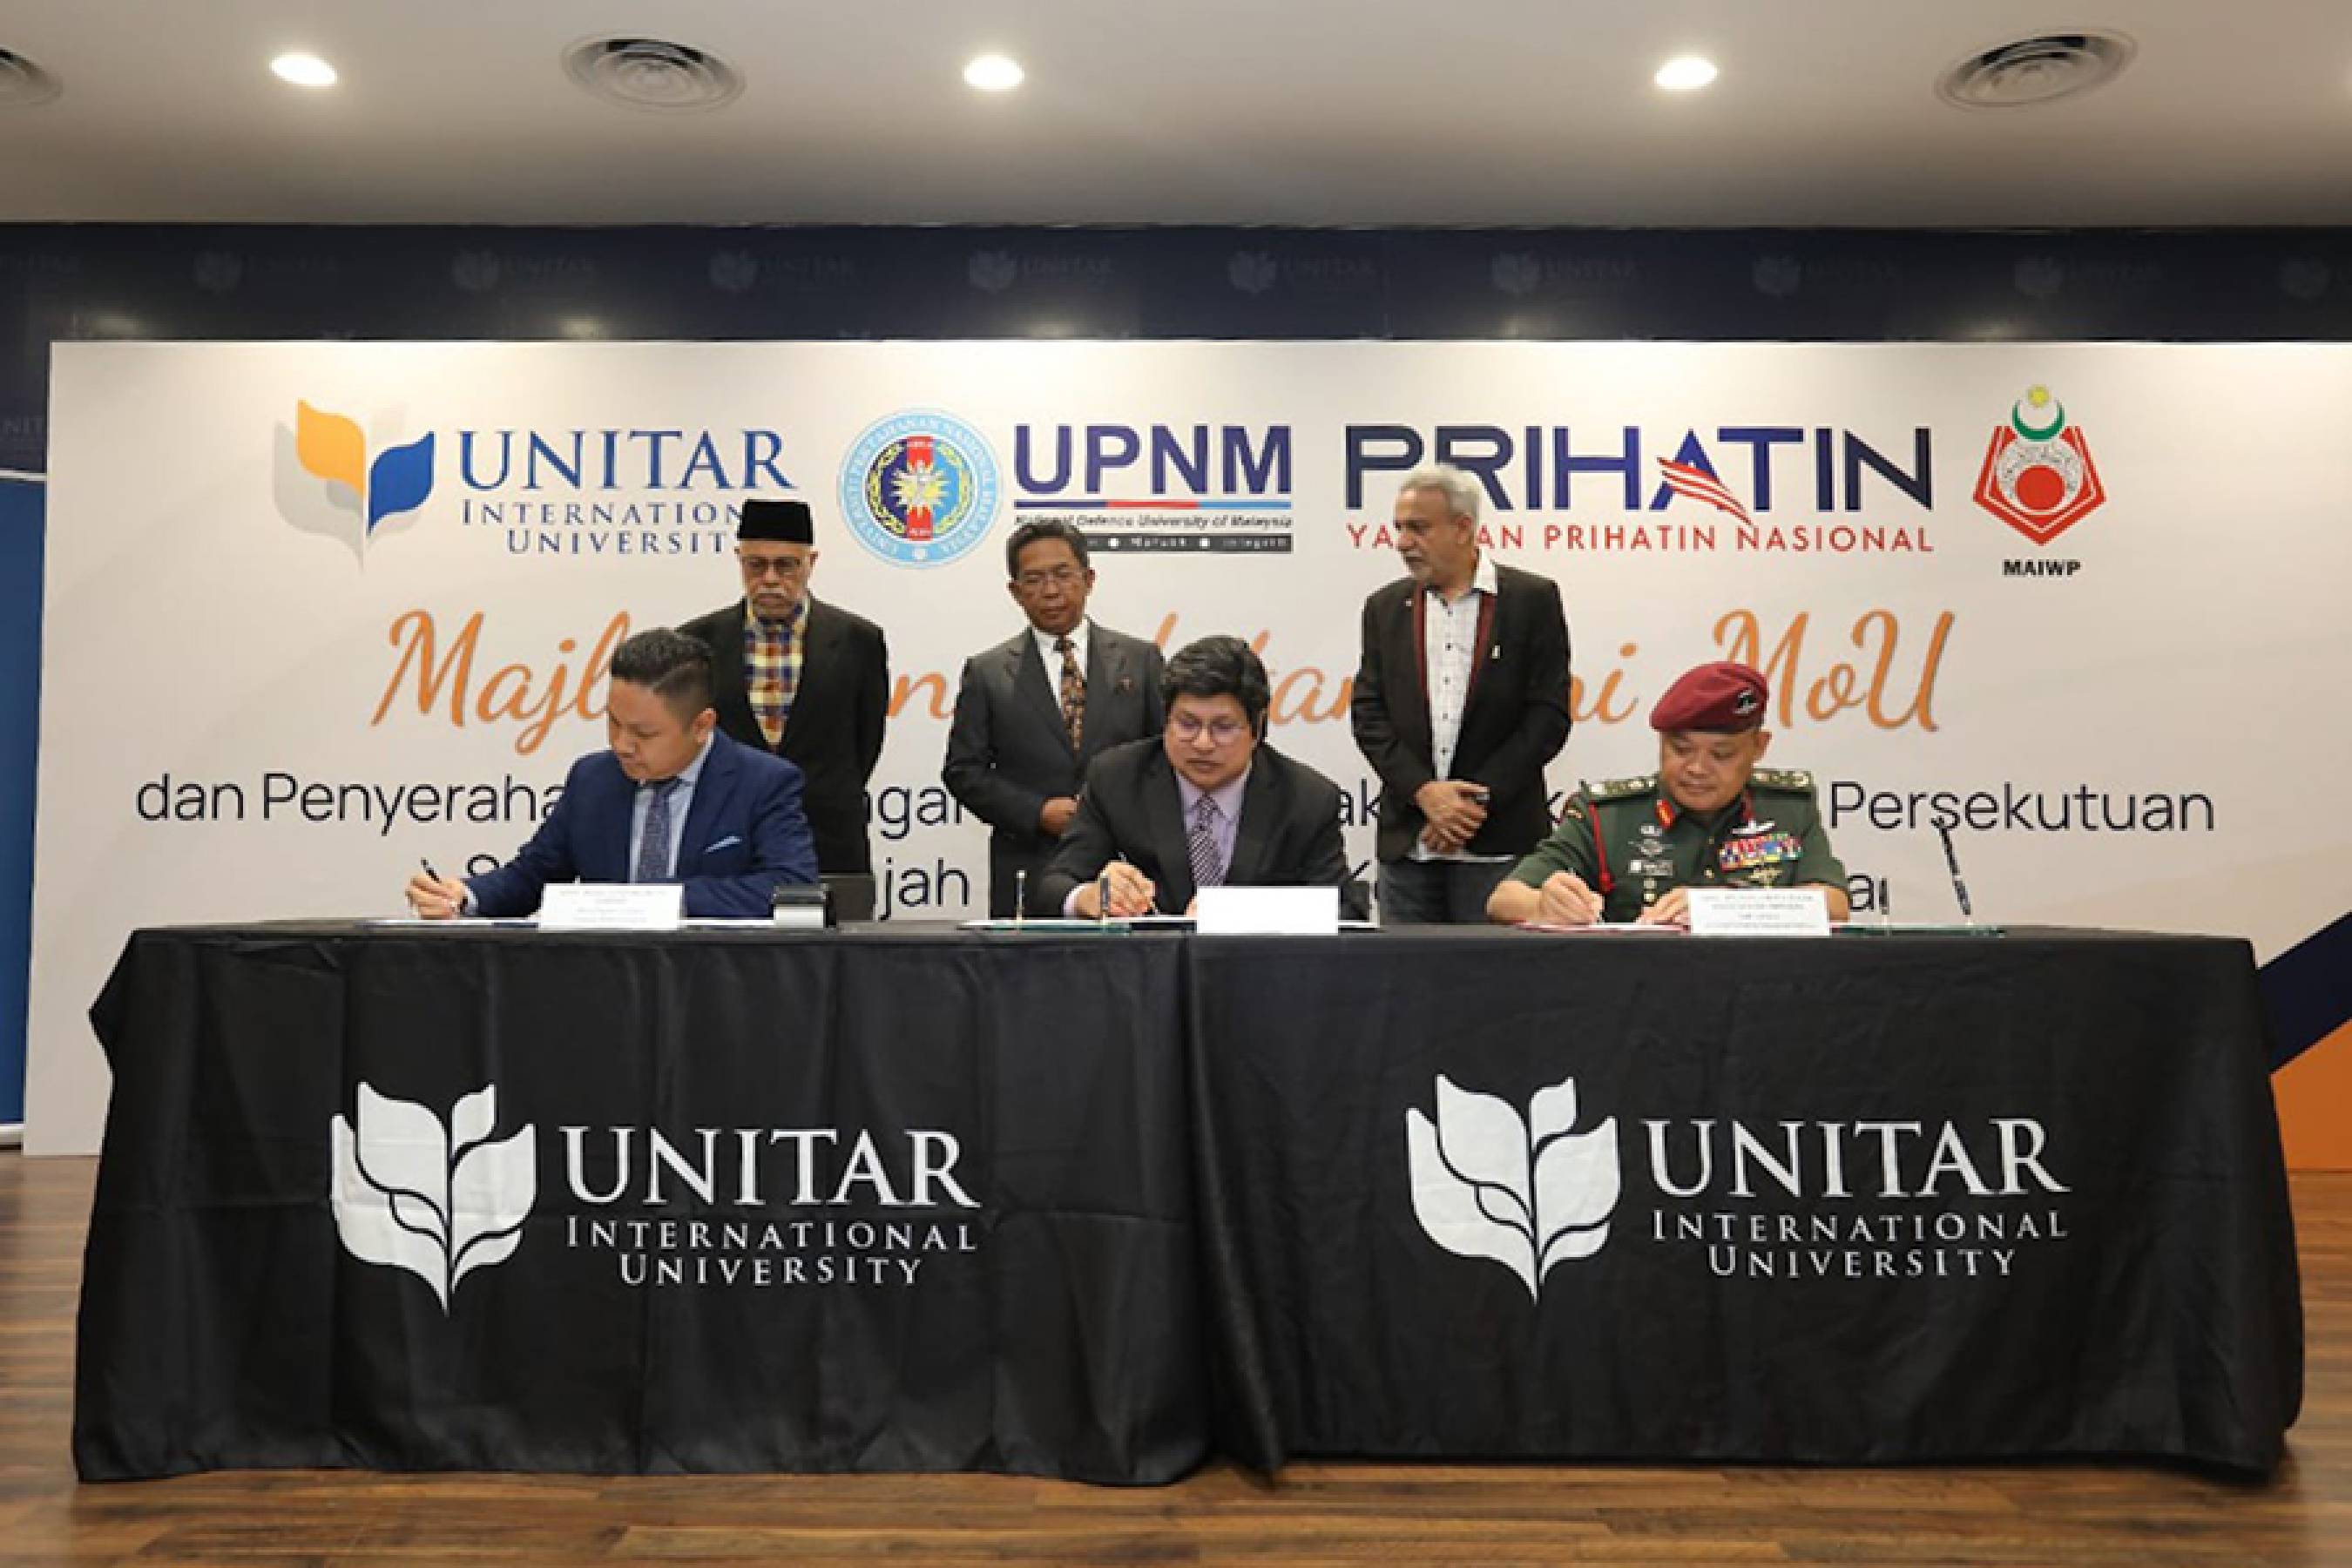 Majlis Menandatangani MoU antara UPNM, UNITAR International University dan Yayasan Prihatin Nasional (PRIHATIN)